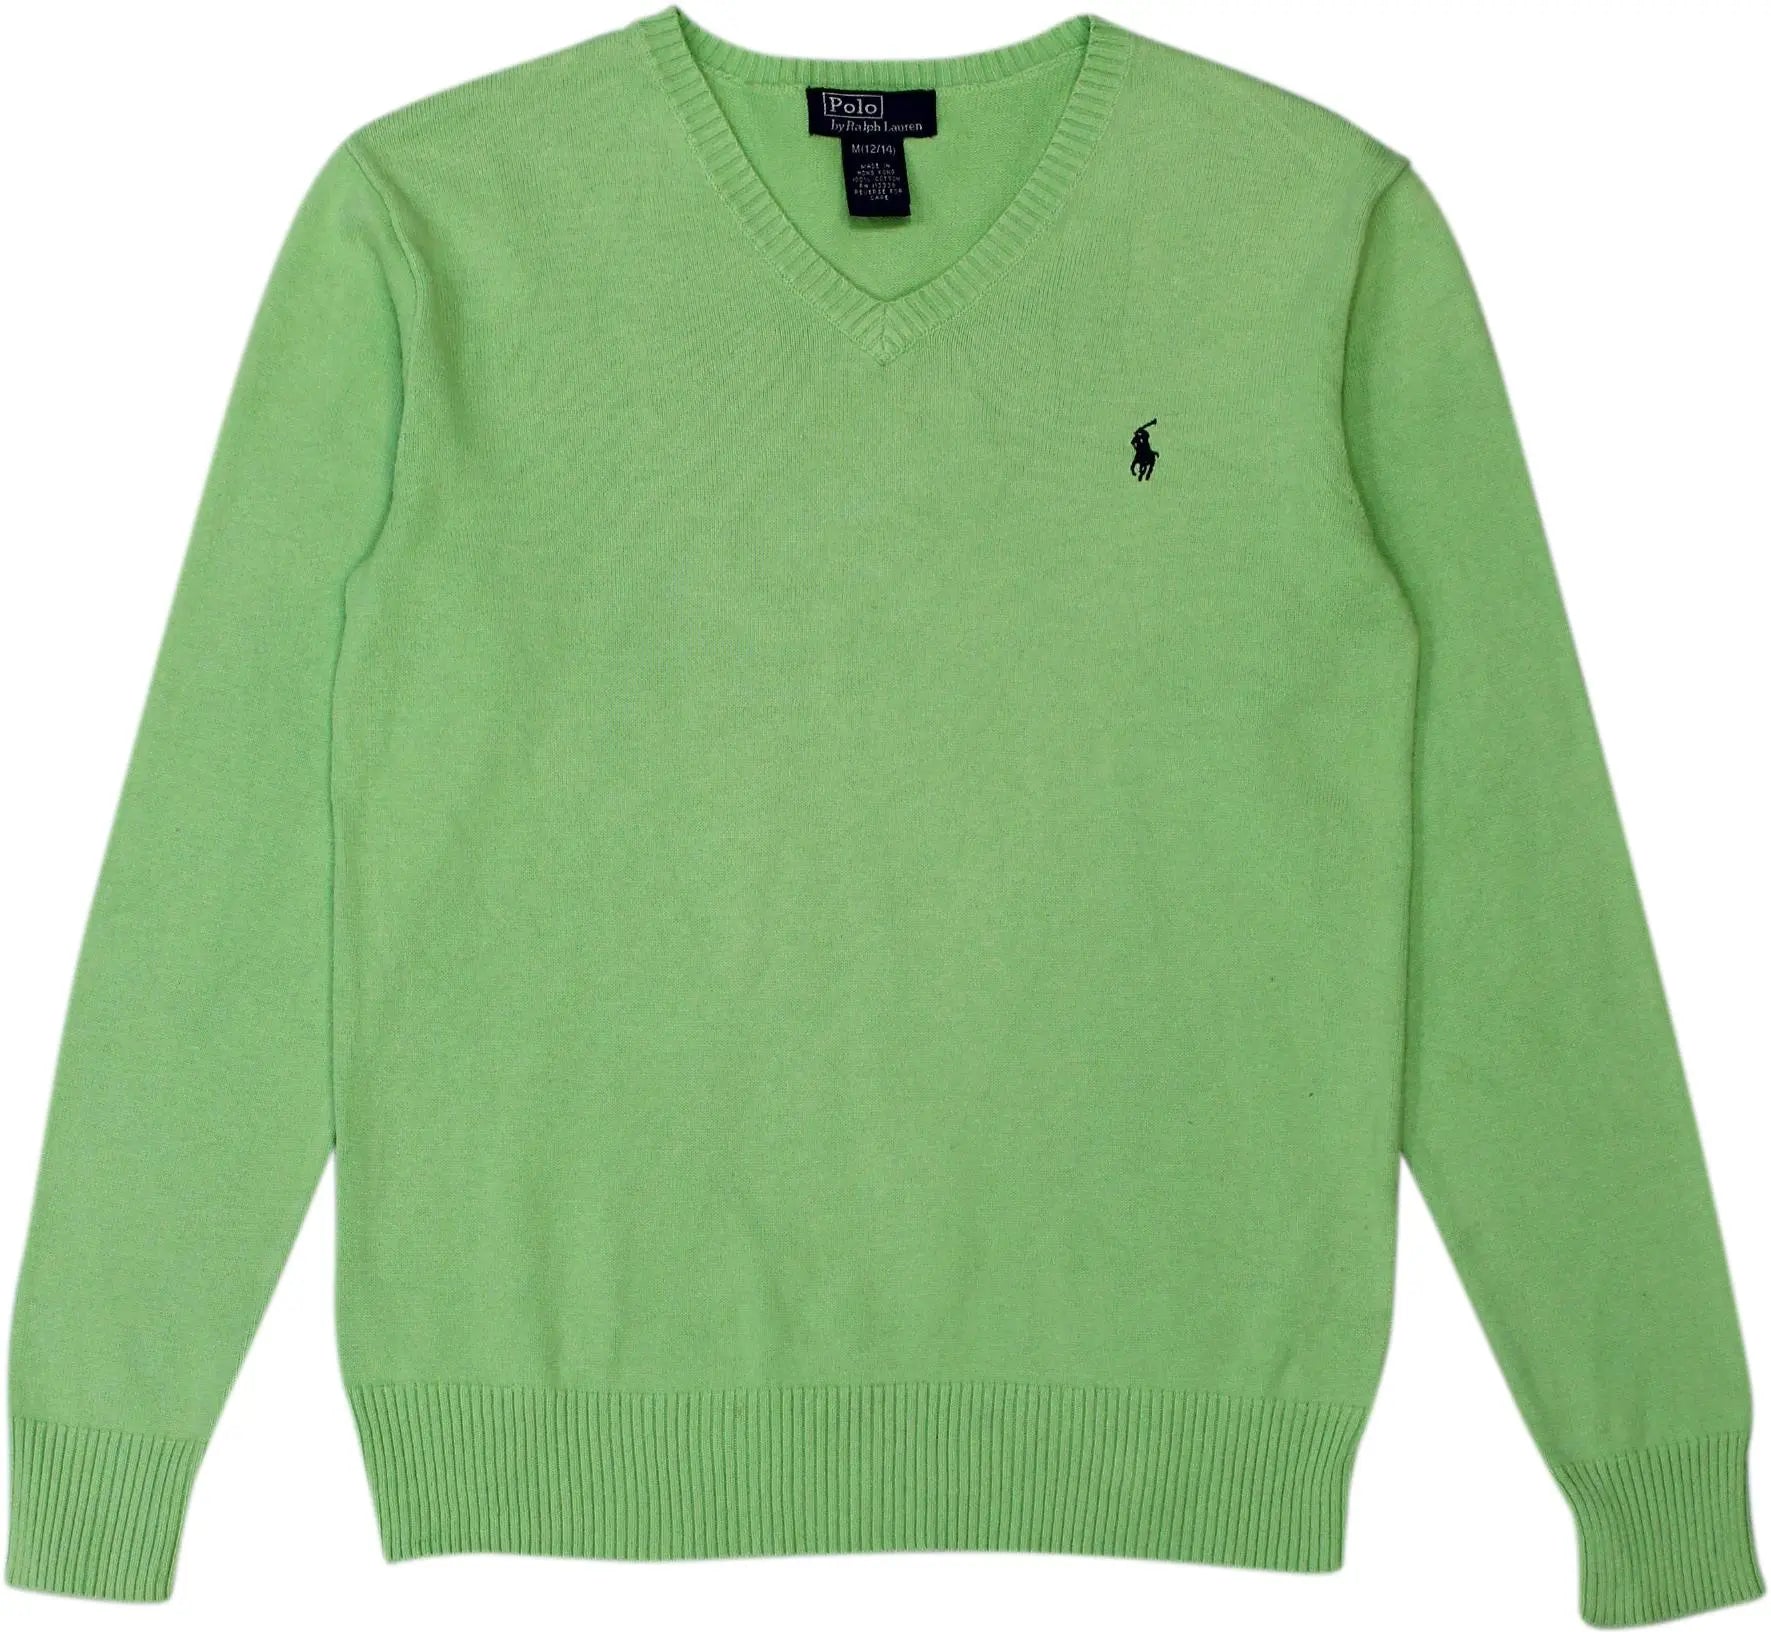 Ralph Lauren - Green V-neck Sweater by Ralph Lauren- ThriftTale.com - Vintage and second handclothing